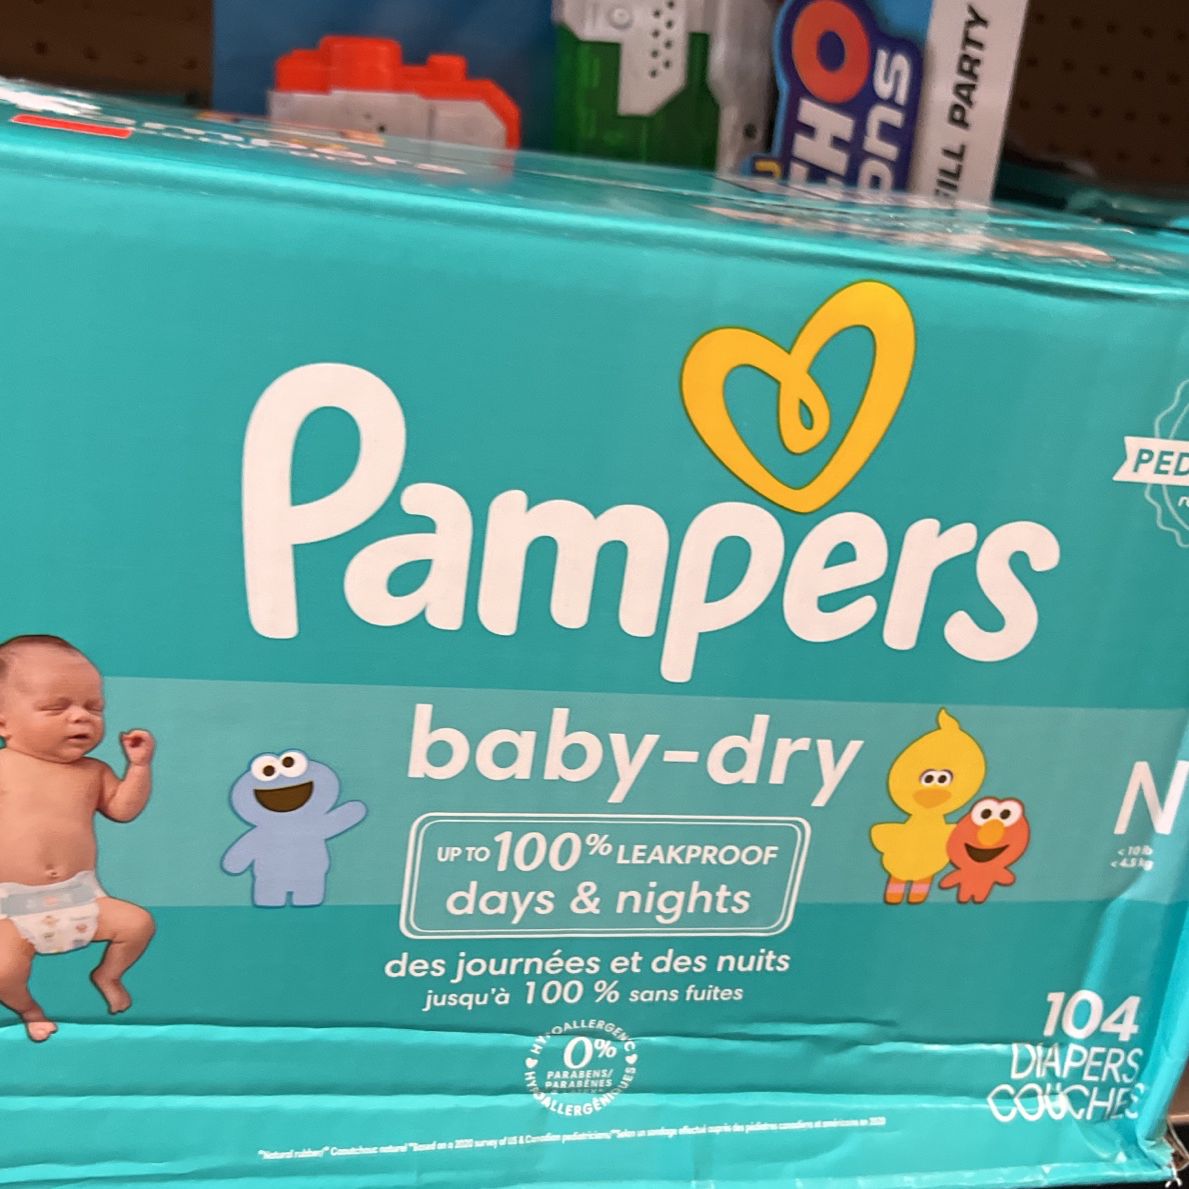 Pampers baby-dry UPTO 100 % LEAKPROOF days & nights des journées et des nuits jusqu'à 100 % sans fuites 0%Pampers baby-dry UPT0 100% LEAKPROOF days & 